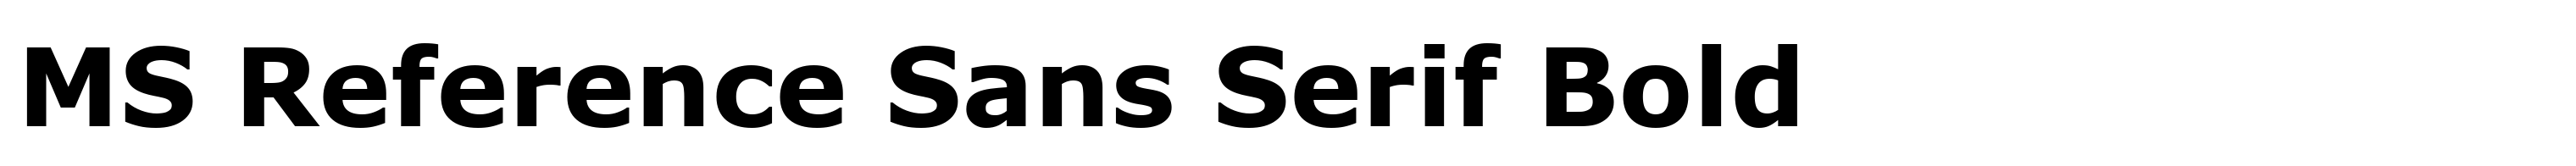 MS Reference Sans Serif Bold